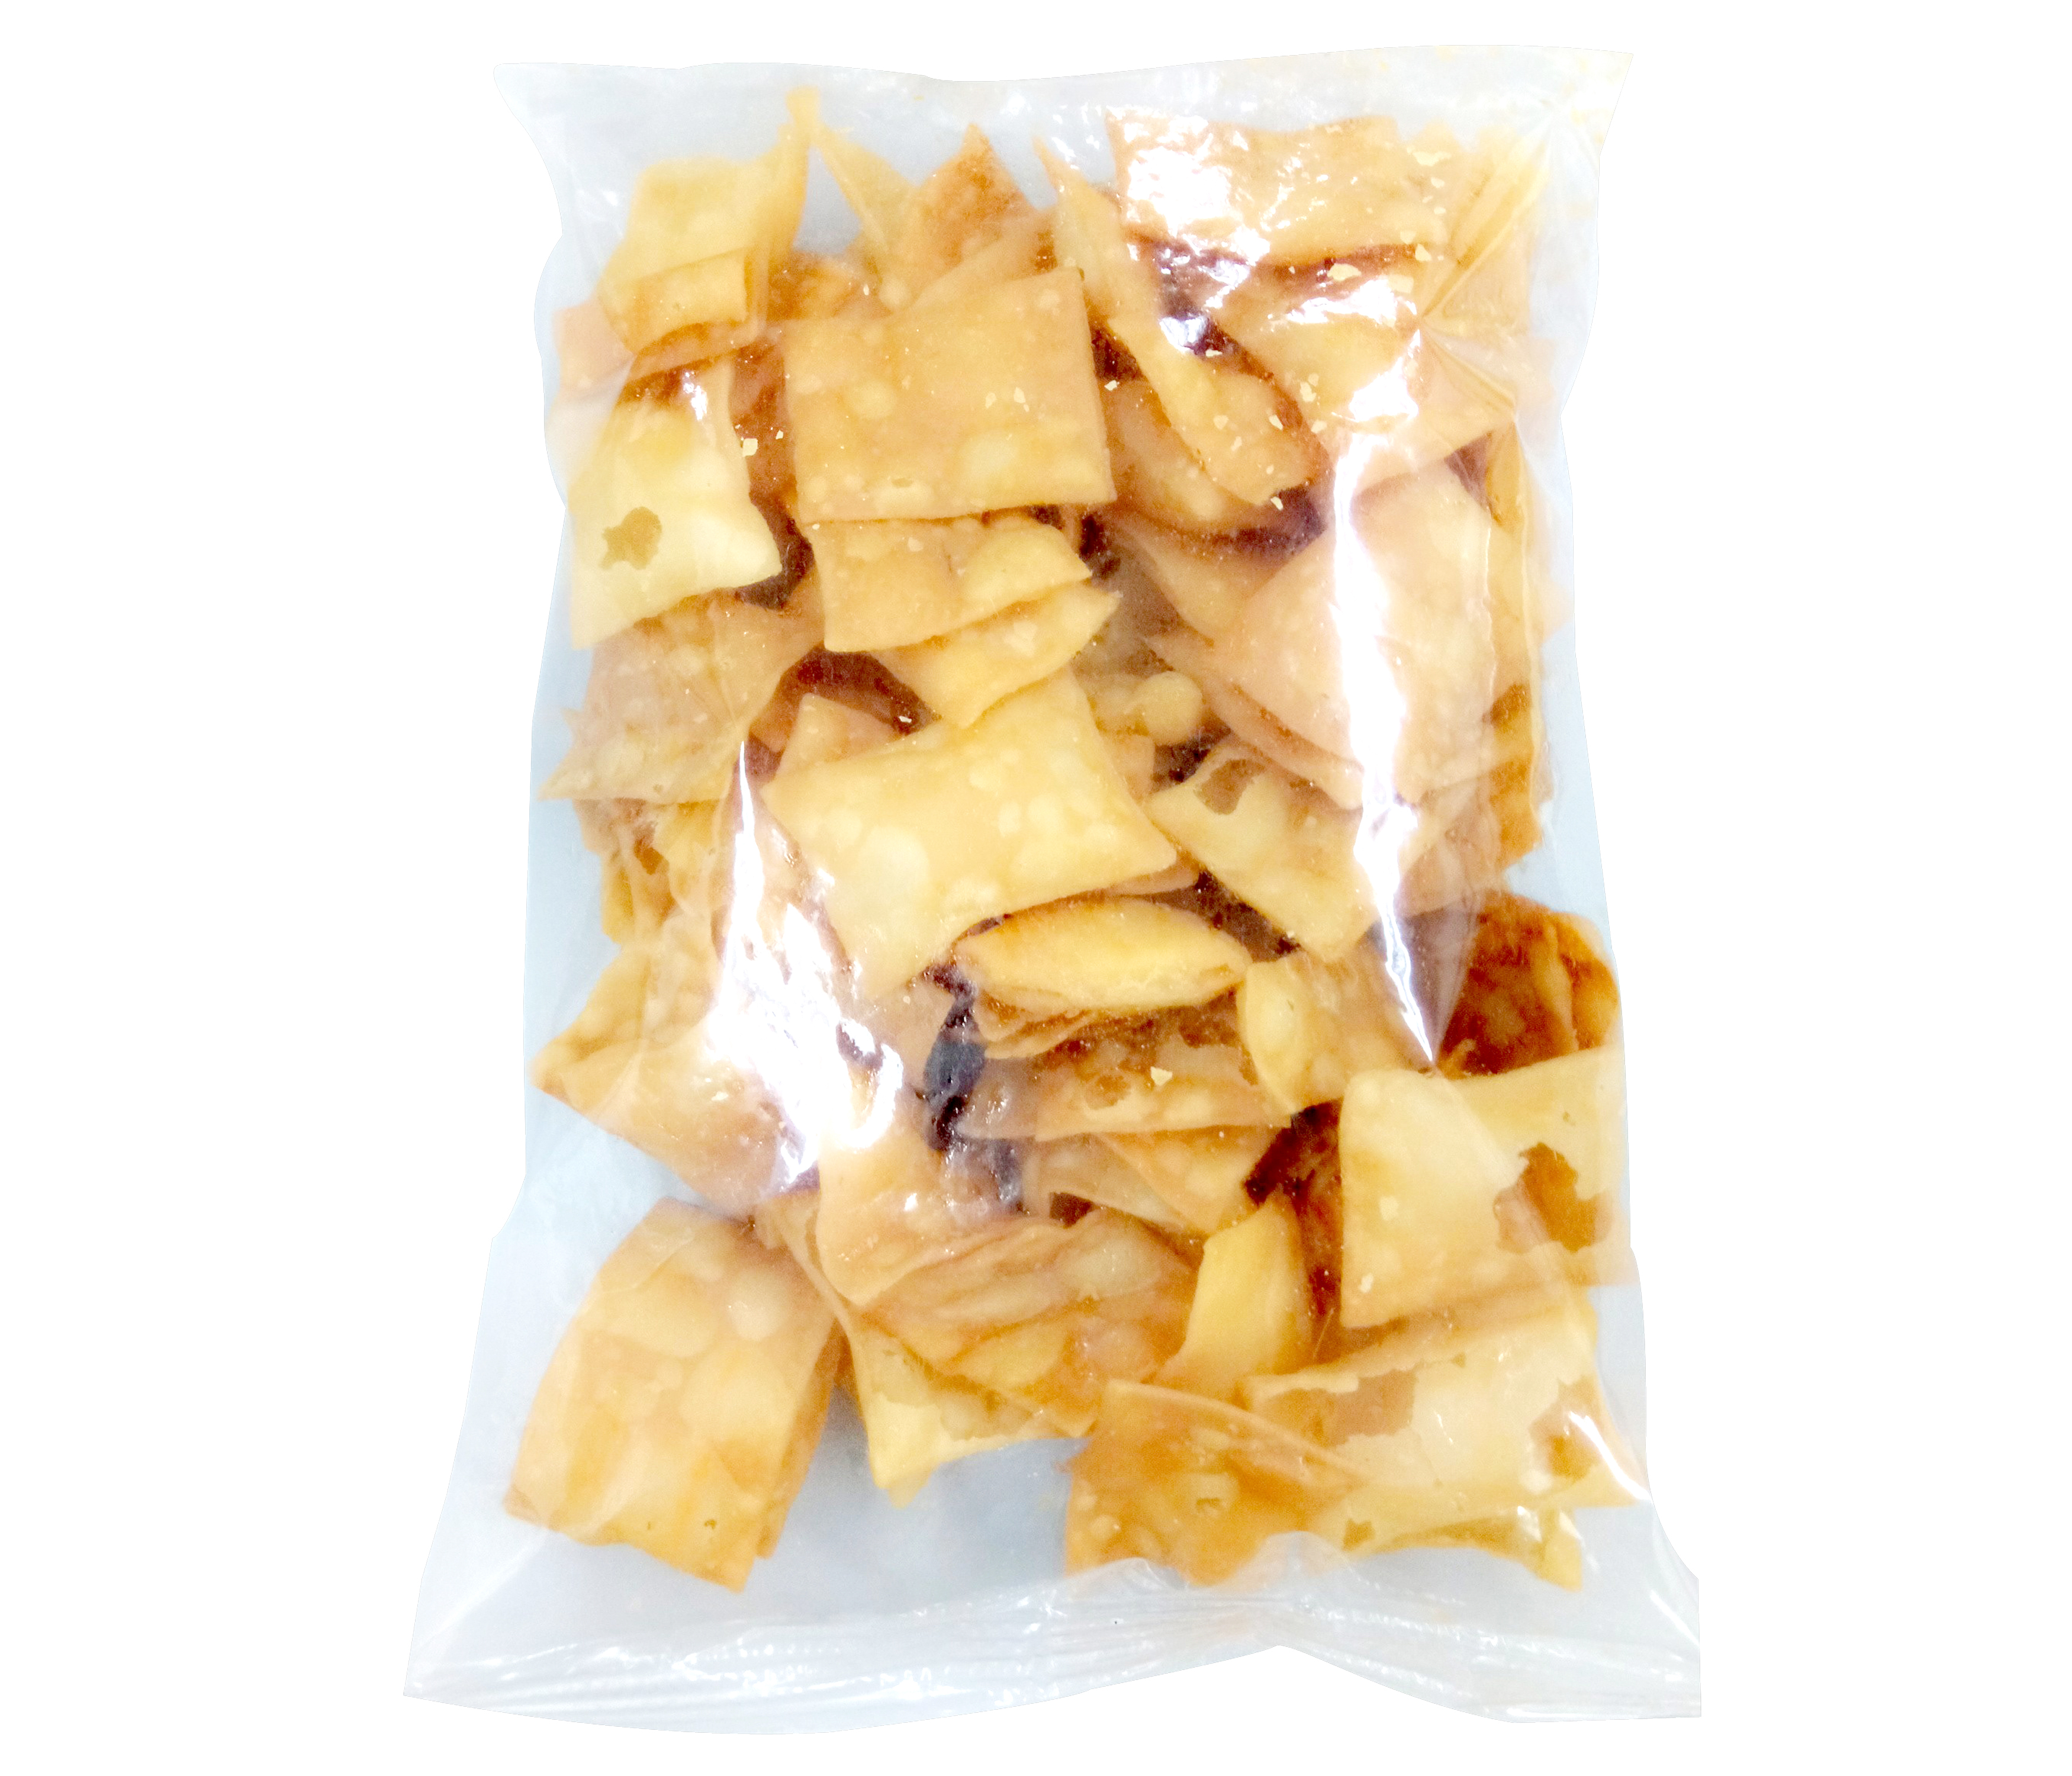 Image <a title="Yu sheng biscuit Poh Choi Nai You Bing 奶油饼 50 grams" href="https://friendlyvegetarian.com.sg/product/225/yu-sheng-biscuit-poh-choi-nai-you-bing-50-grams">Yu sheng biscuit Poh Choi Nai You Bing 奶油饼 50 grams</a>